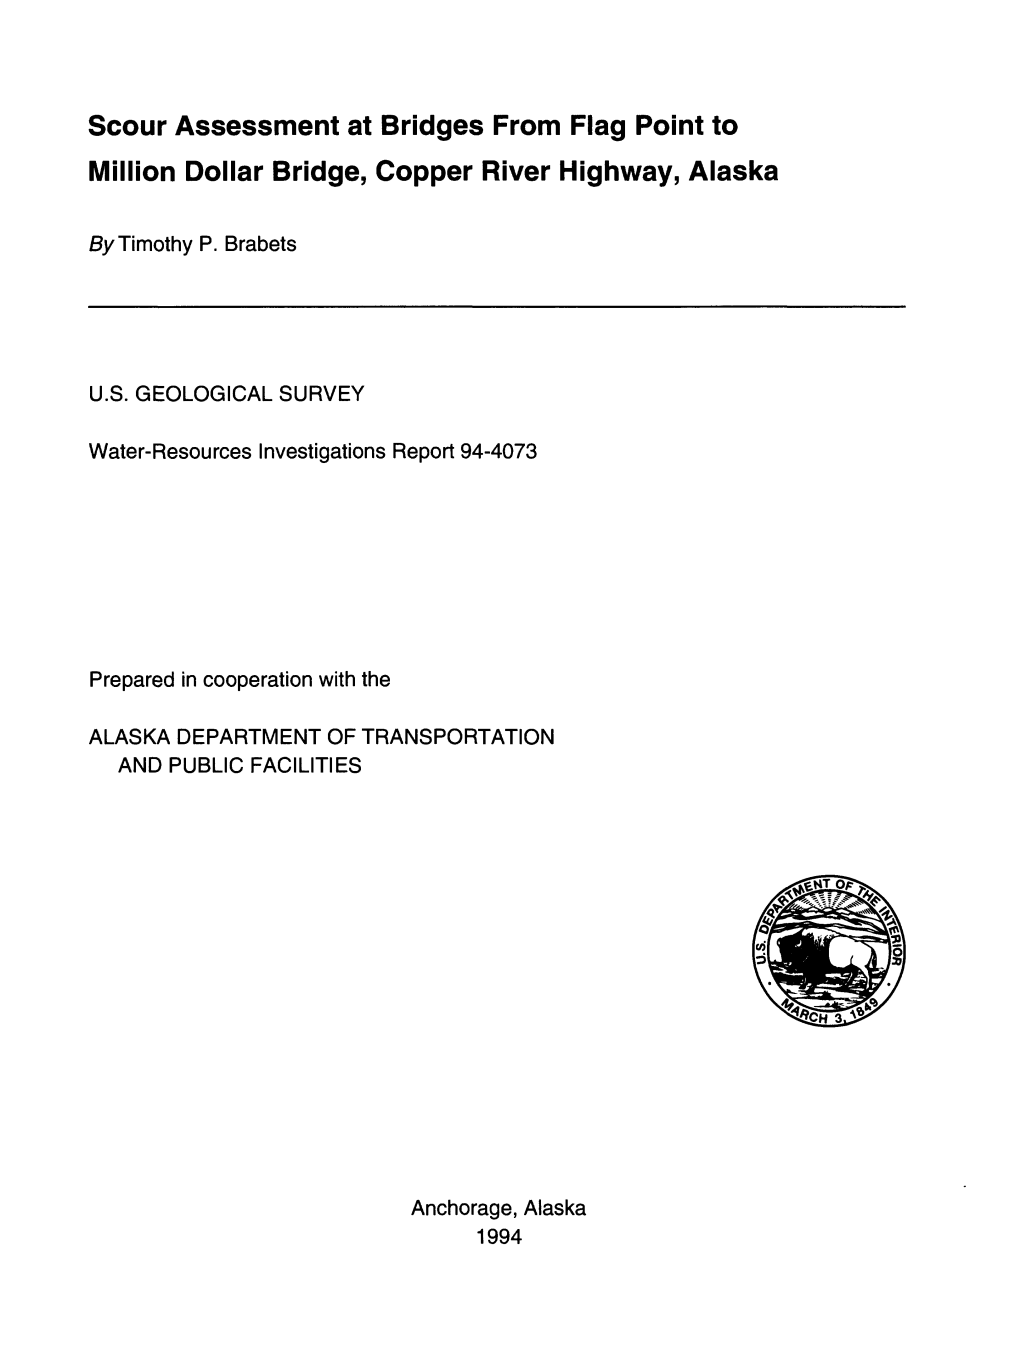 Scour Assessment at Bridges from Flag Point to Million Dollar Bridge, Copper River Highway, Alaska